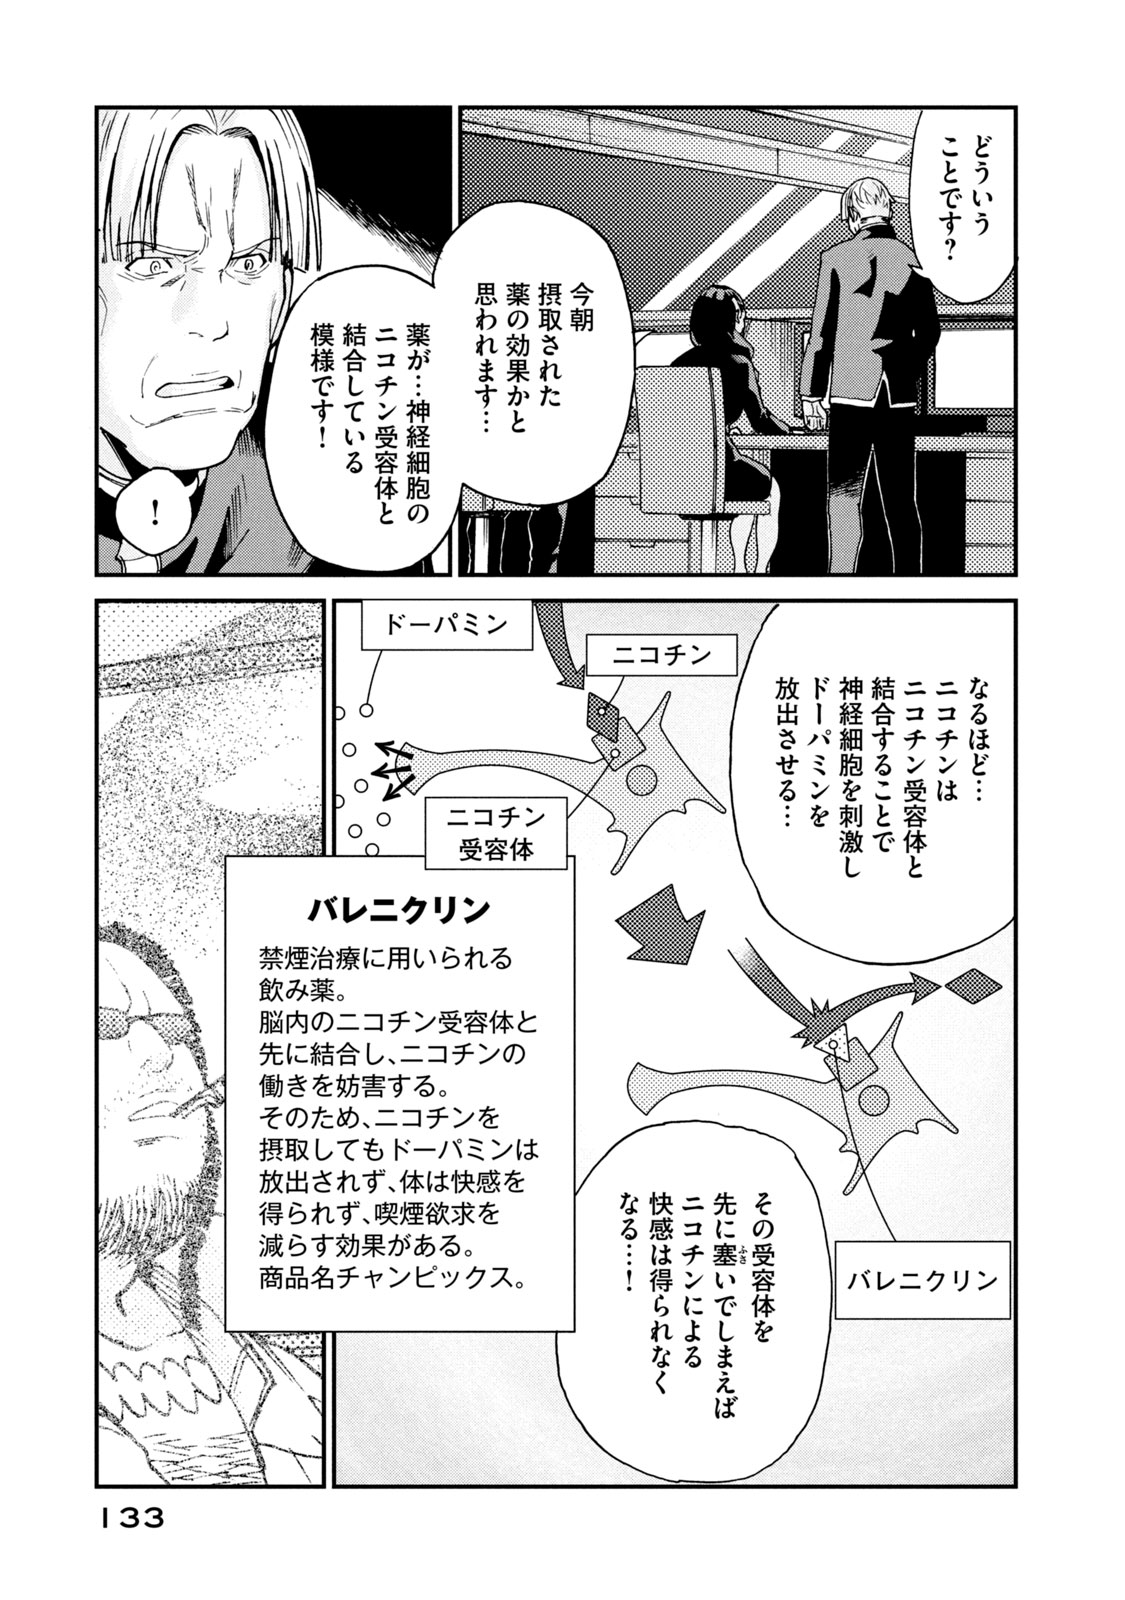 Hataraku Saibou BLACK - Chapter 36 - Page 11